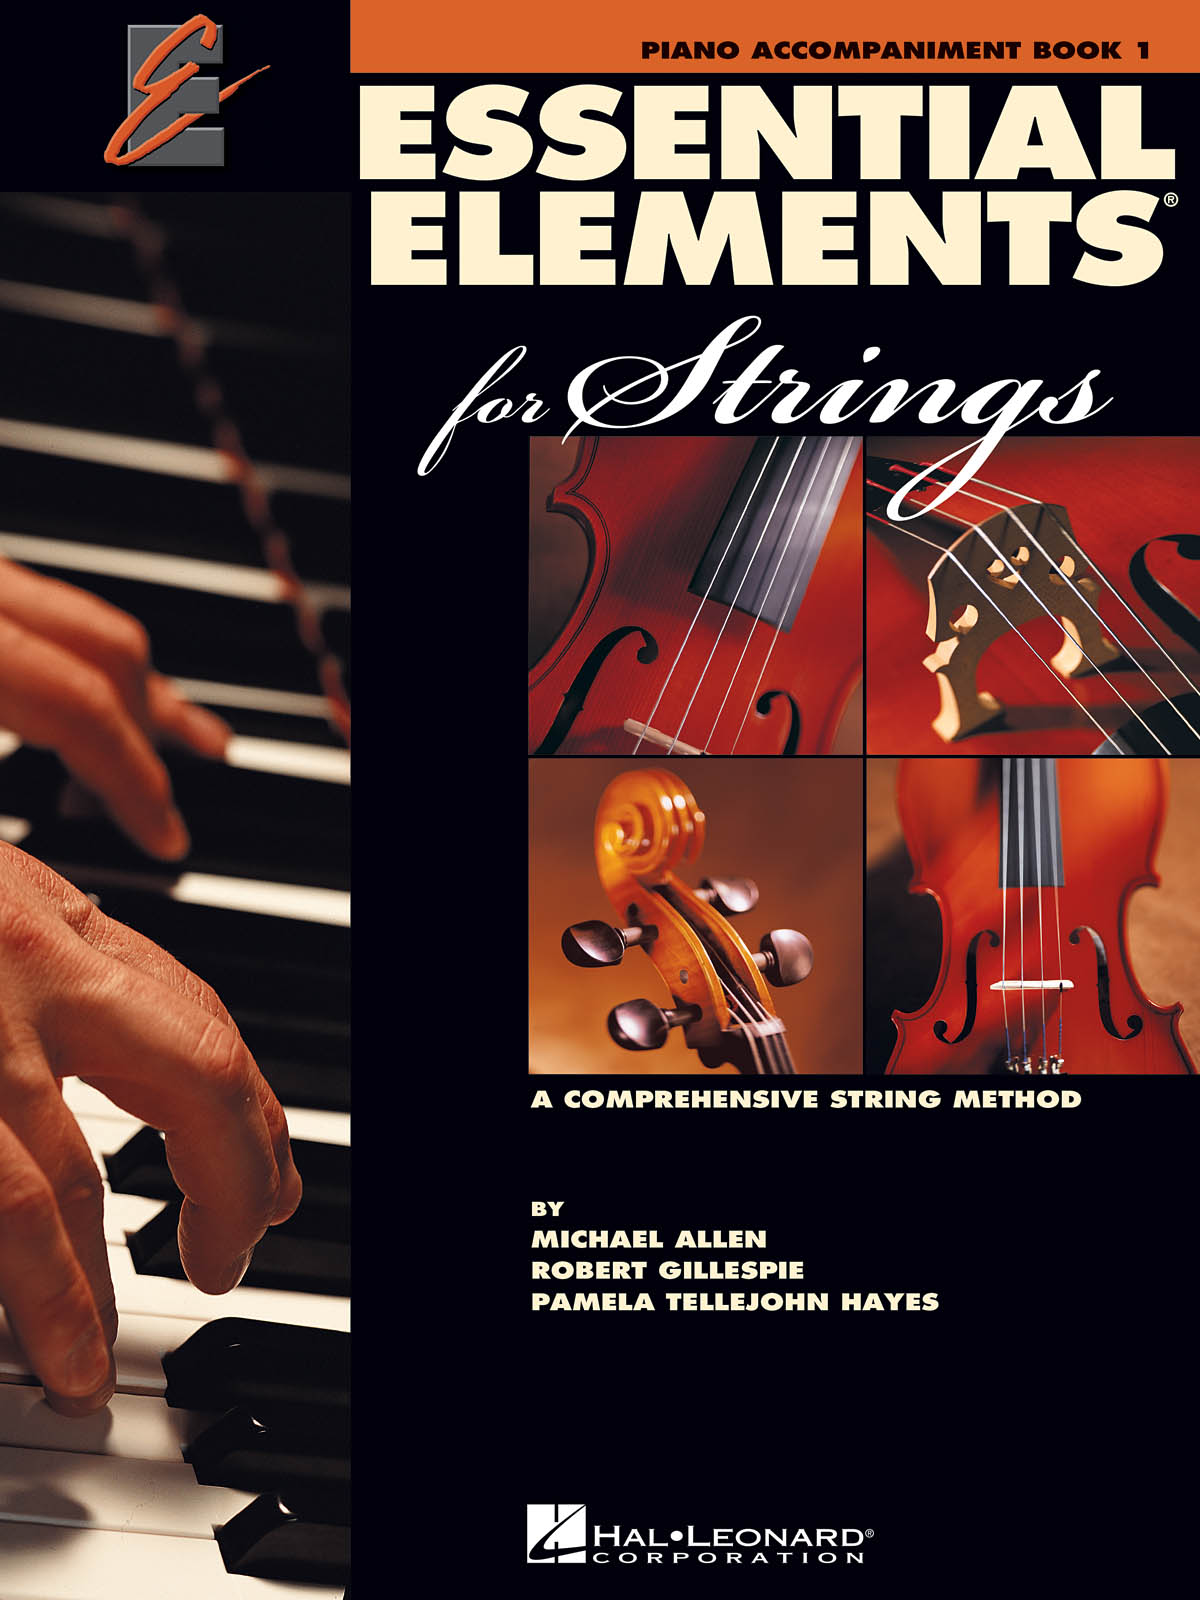 Essential Elements 2000 For Strings Book 1 (Pianobegeleiding)